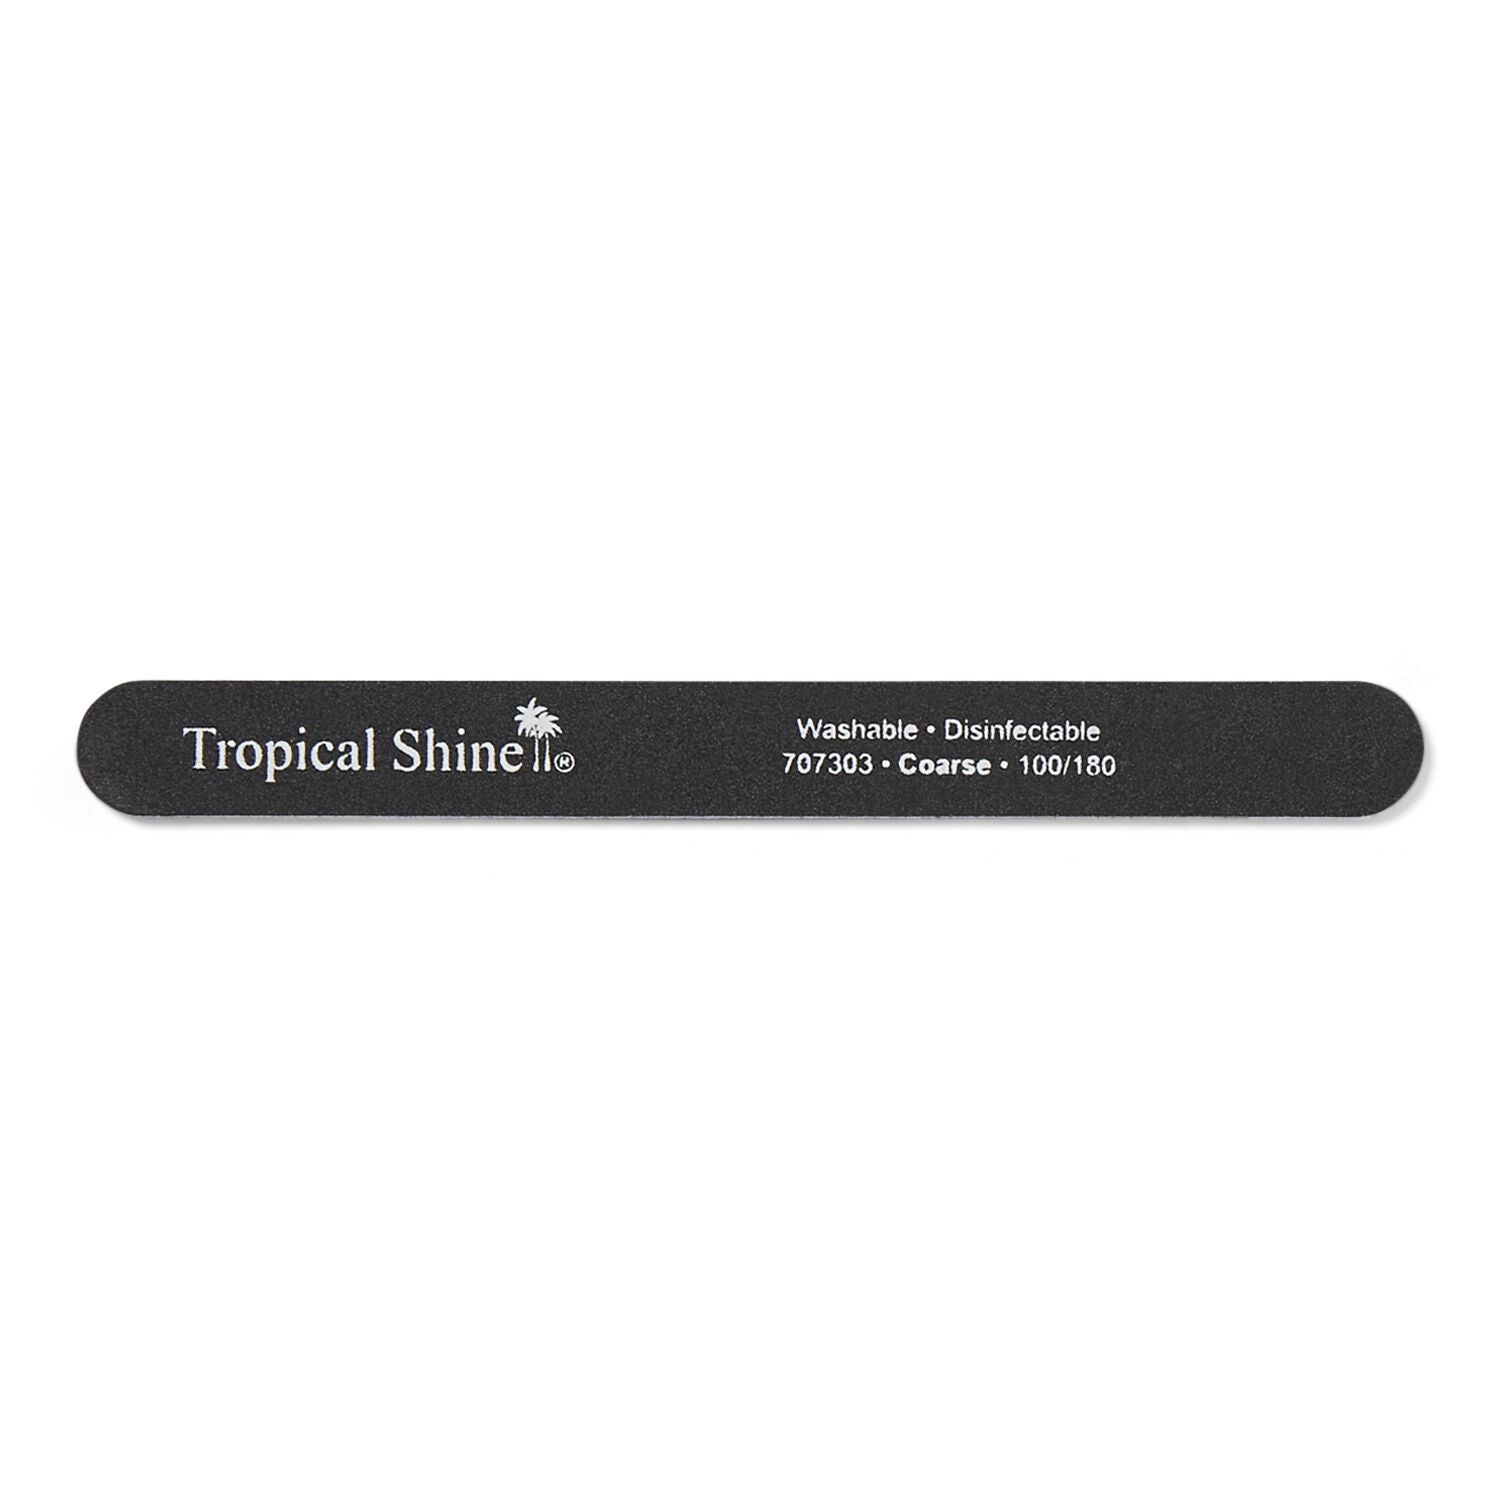 Tropical Shine Black Cushion Nail File Coarse 100/180